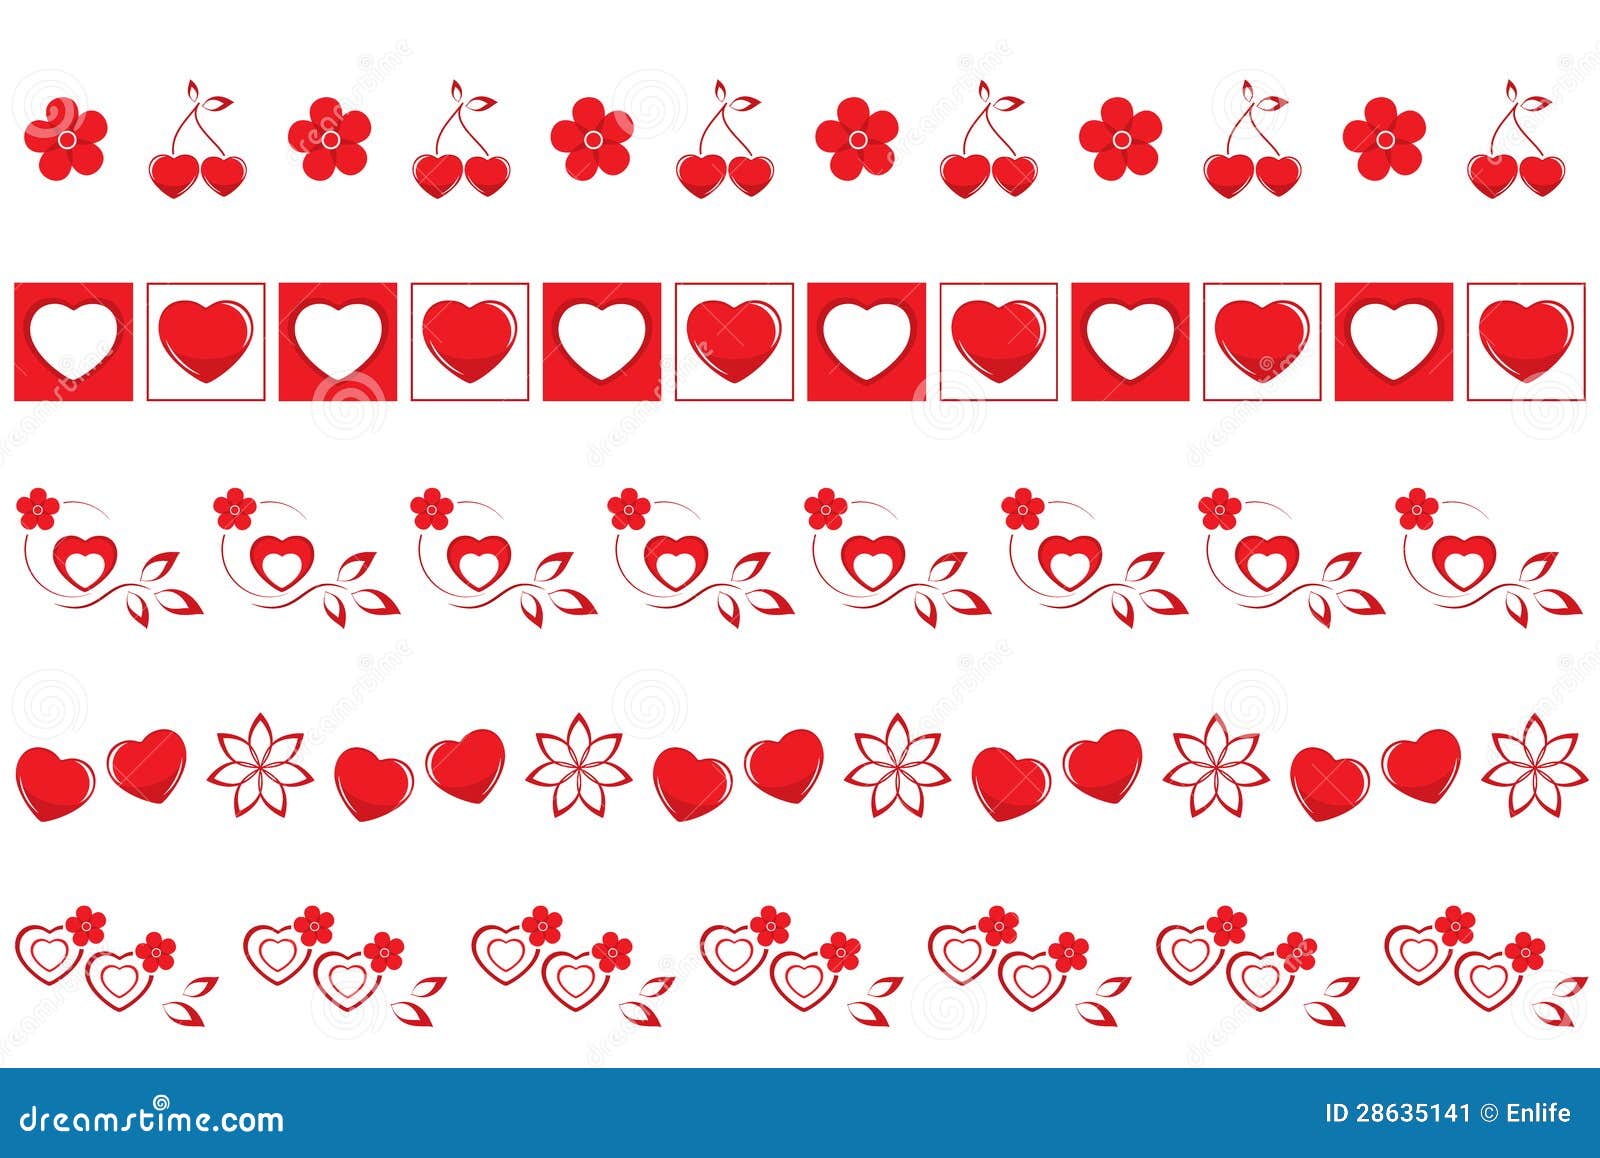 Valentines borders set #2 stock illustration. Illustration of line - 28635141